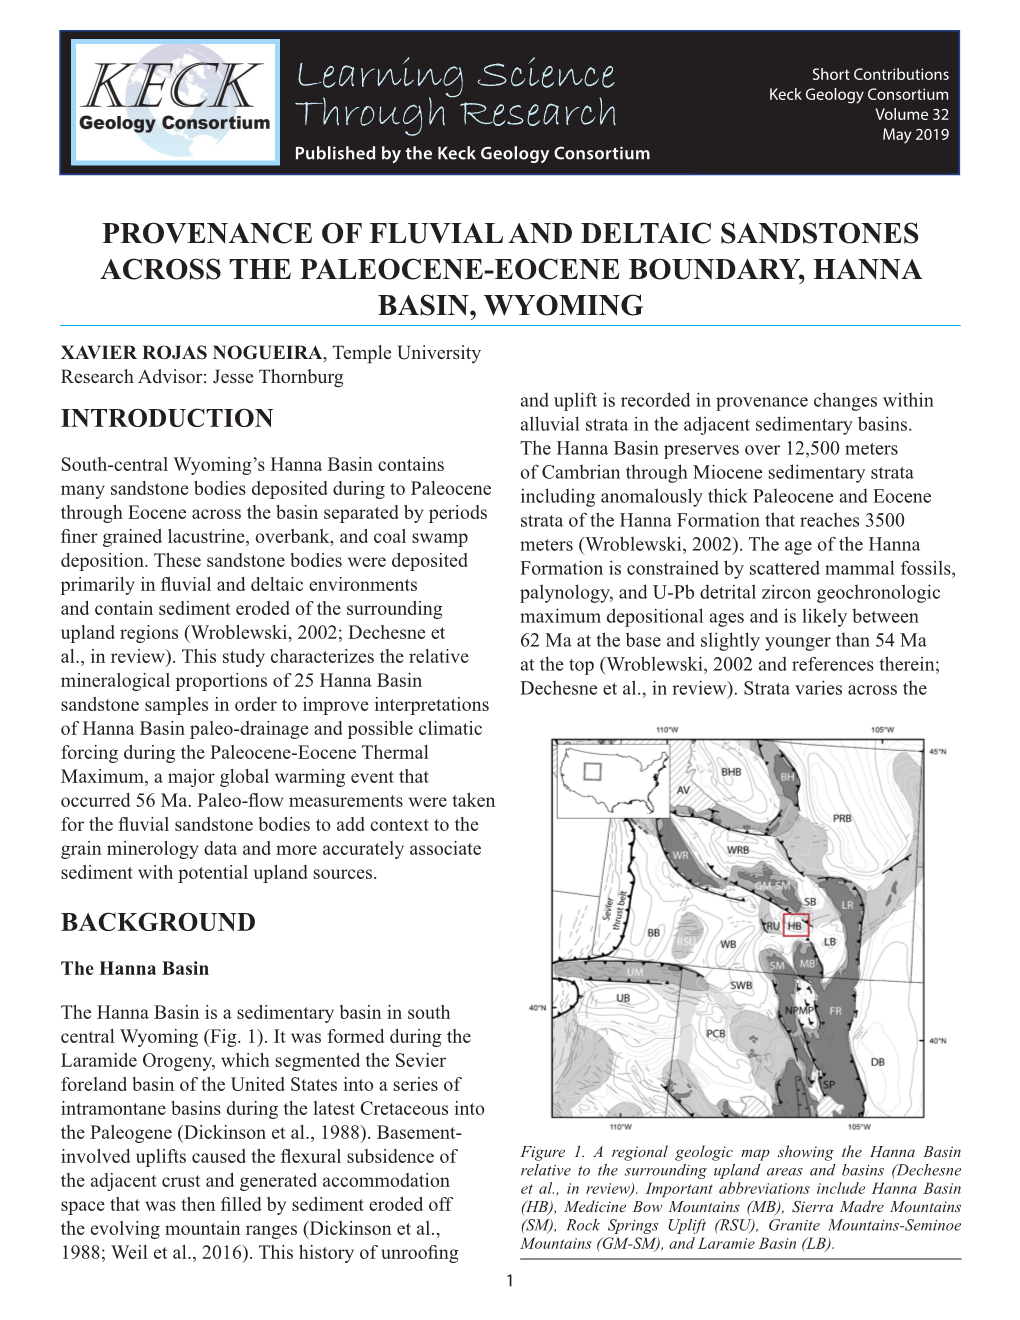 Provenance of Fluvial and Deltaic Sandstones Across the Paleocene-Eocene Boundary, Hanna Basin, Wyoming